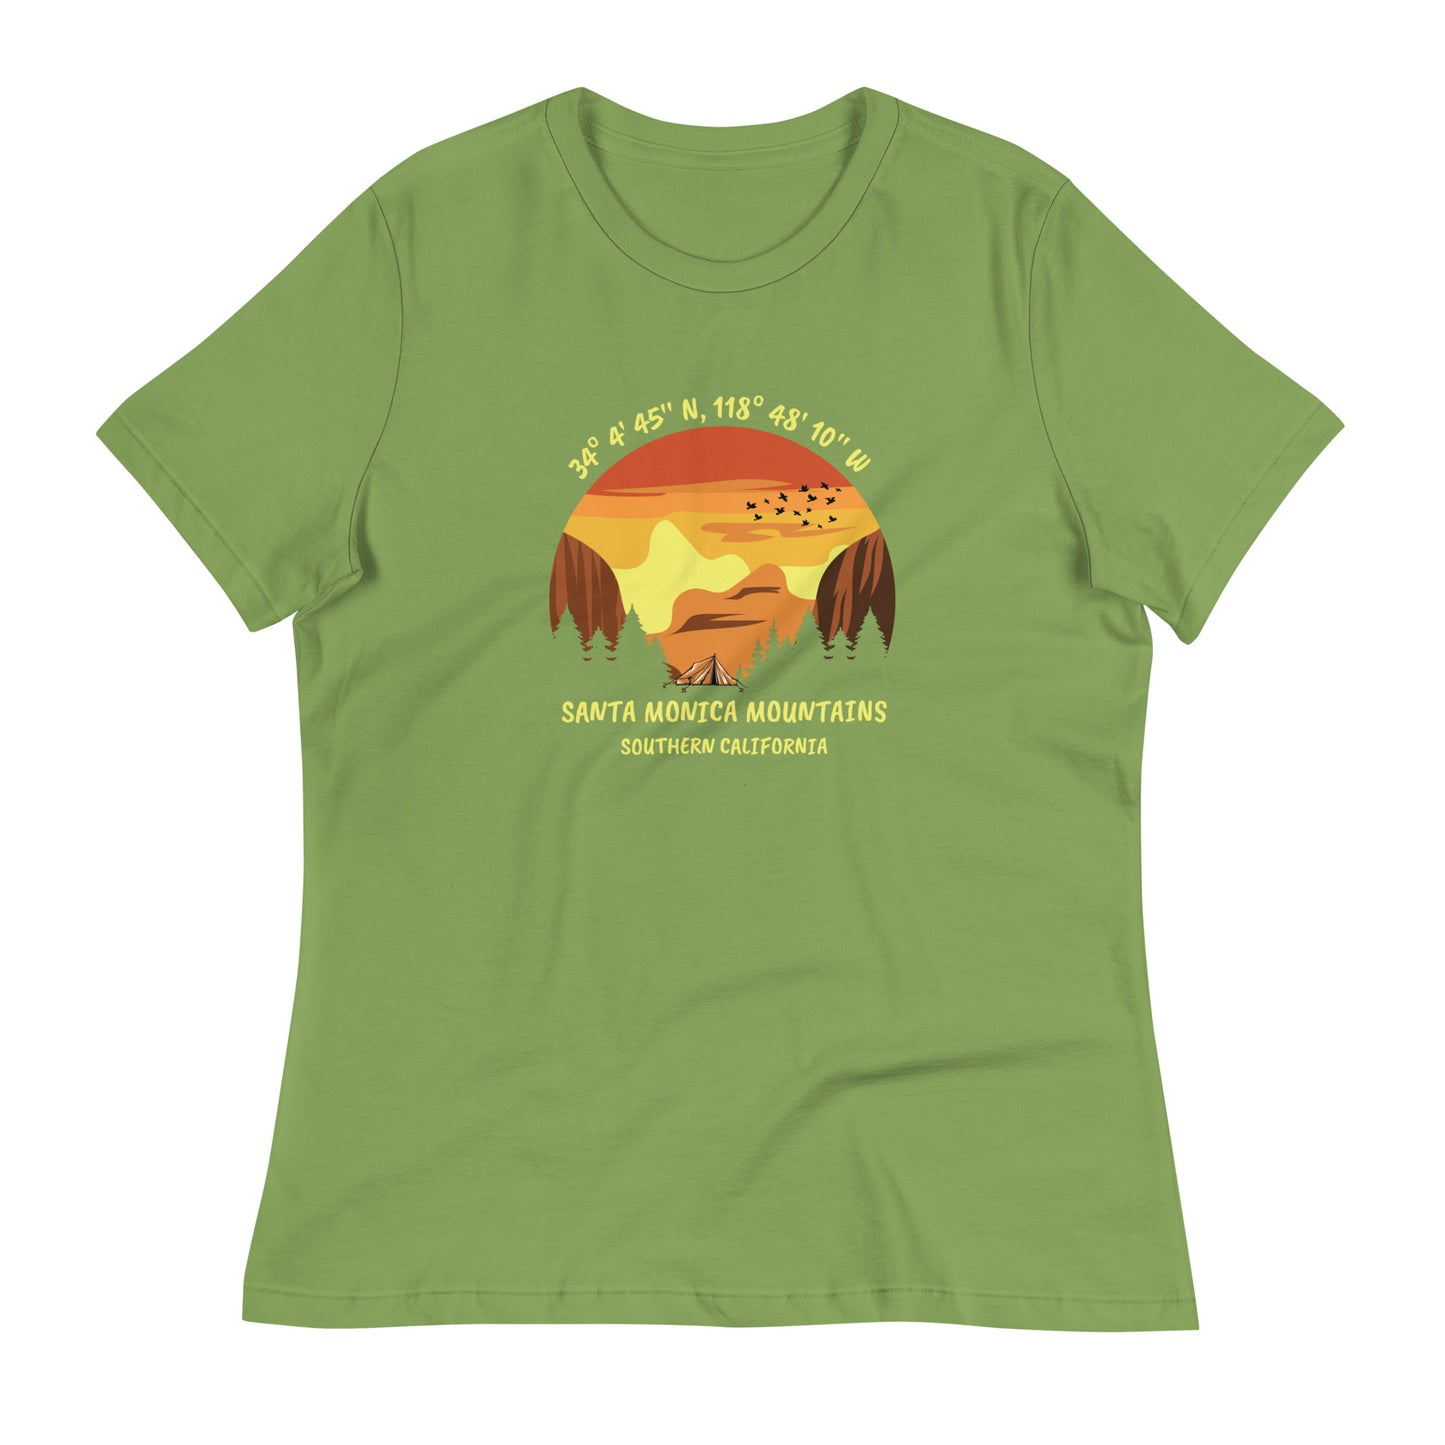 Santa Monica Mountains T-Shirt - Women's